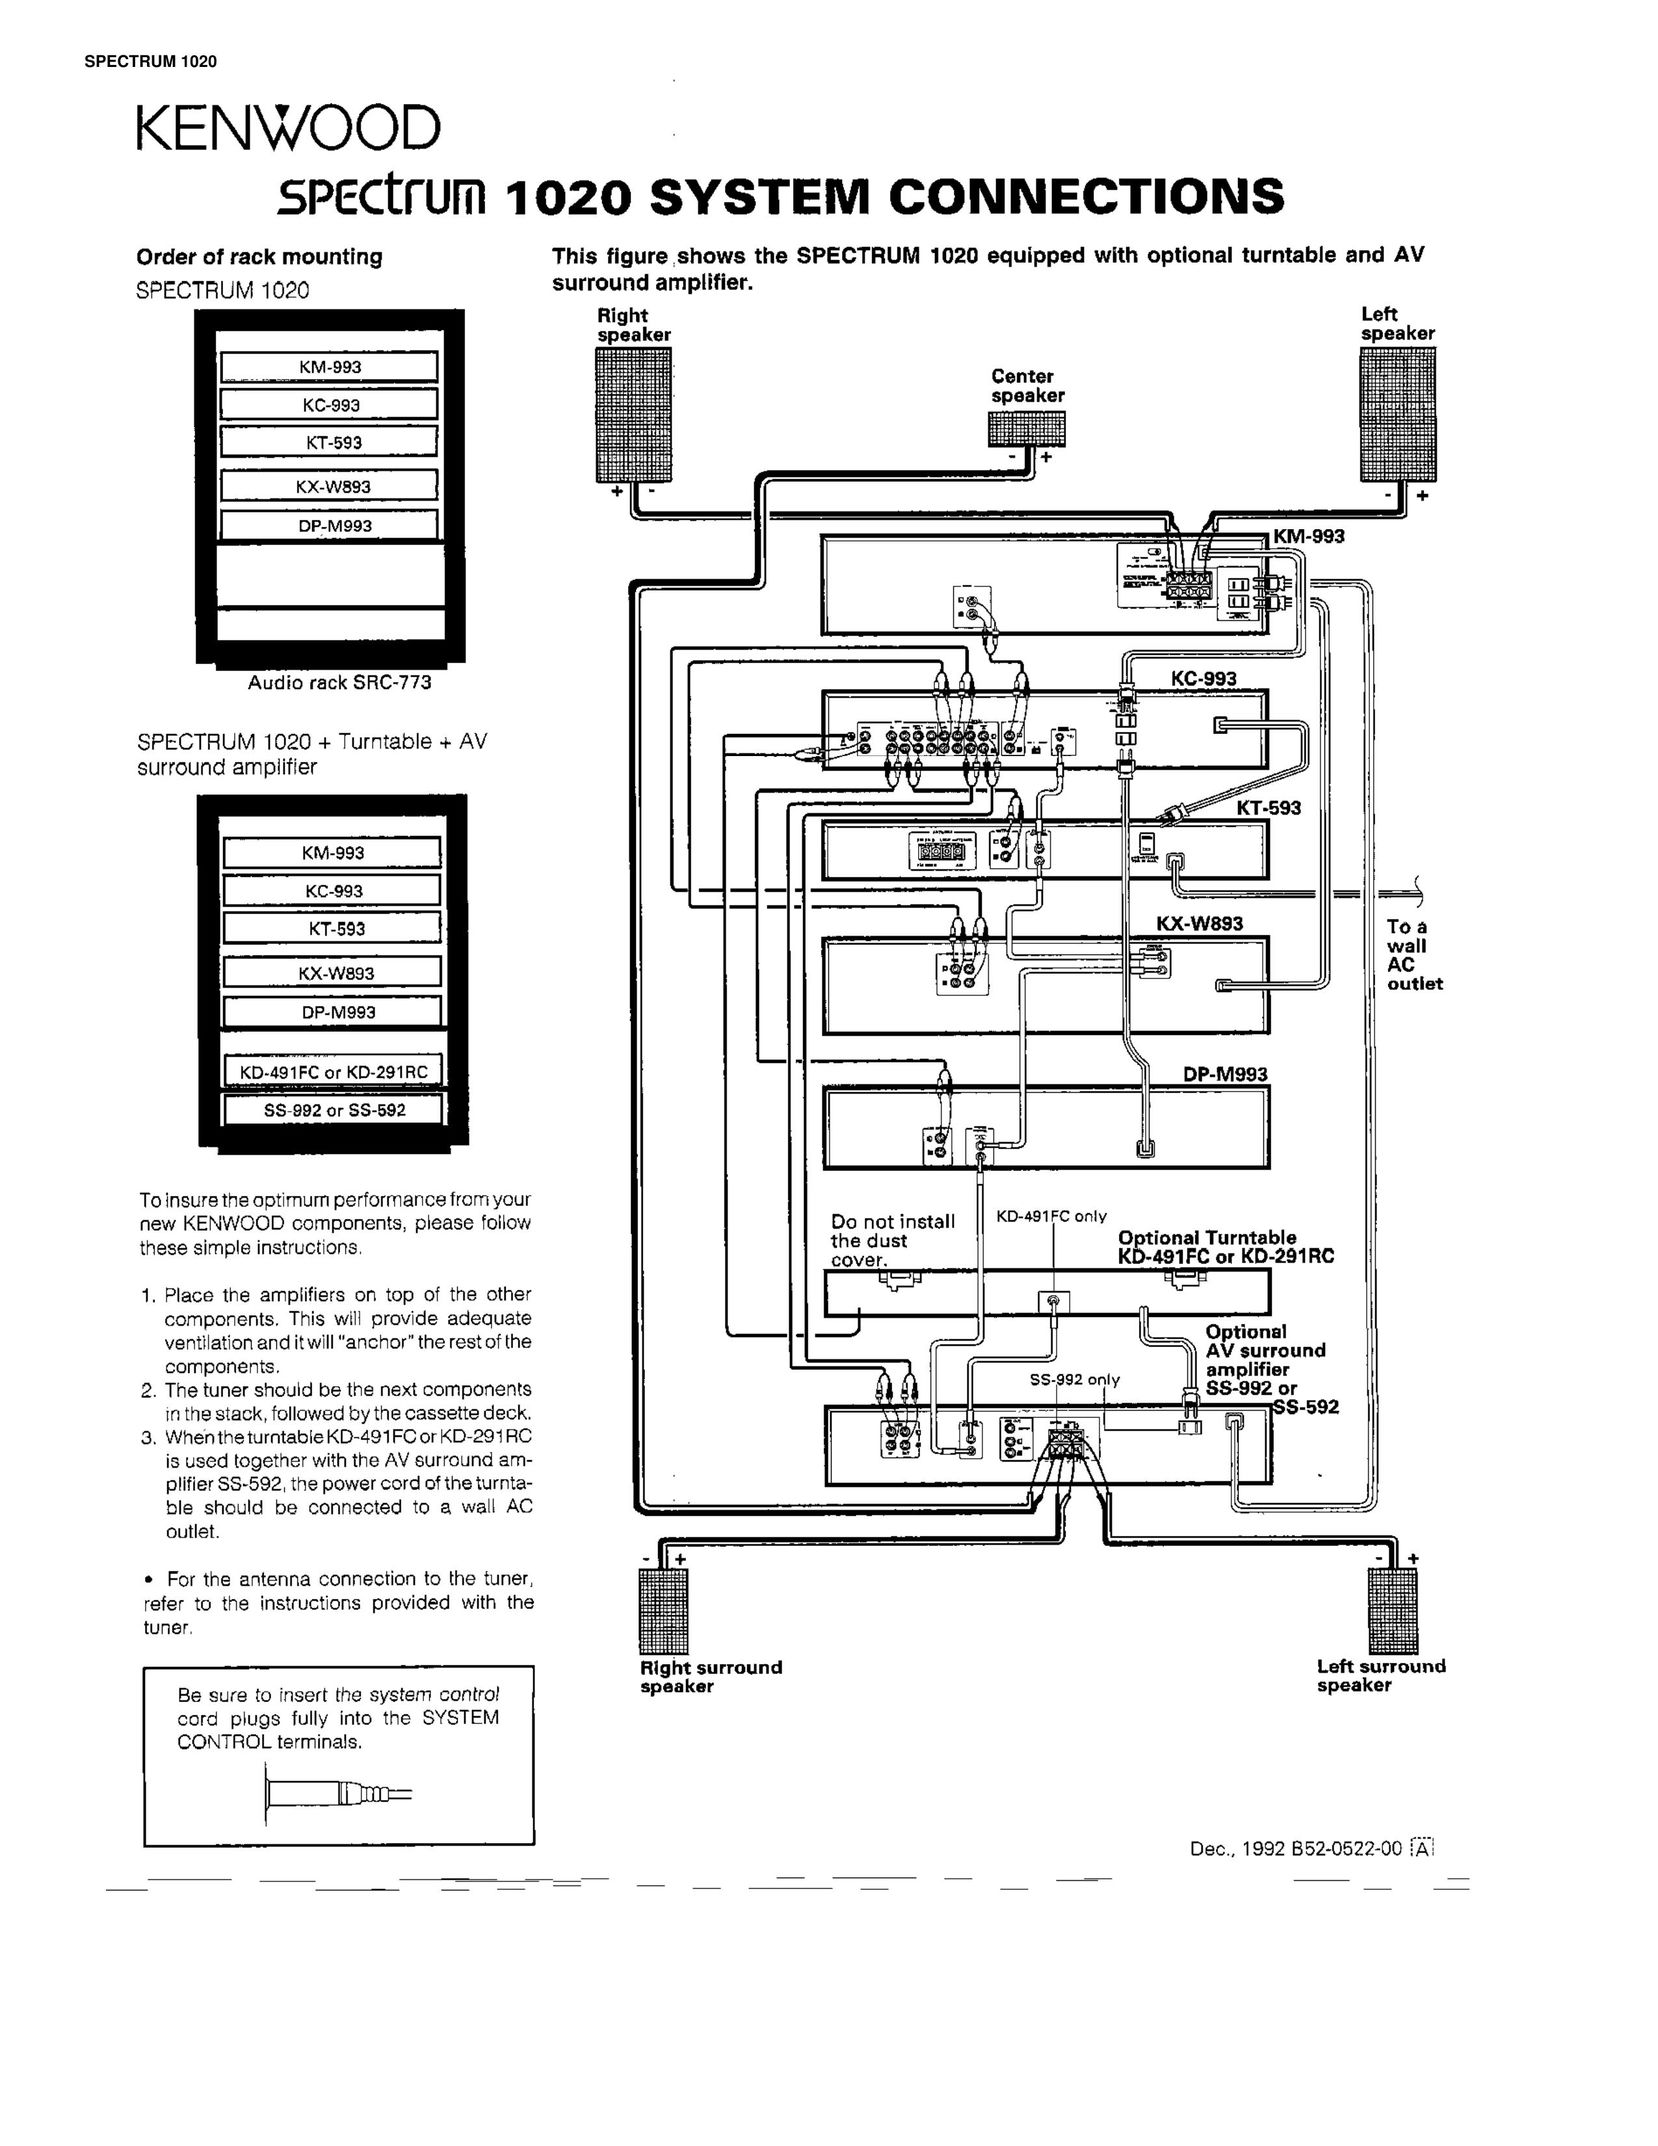 Kenwood KC-933 Stereo Receiver User Manual